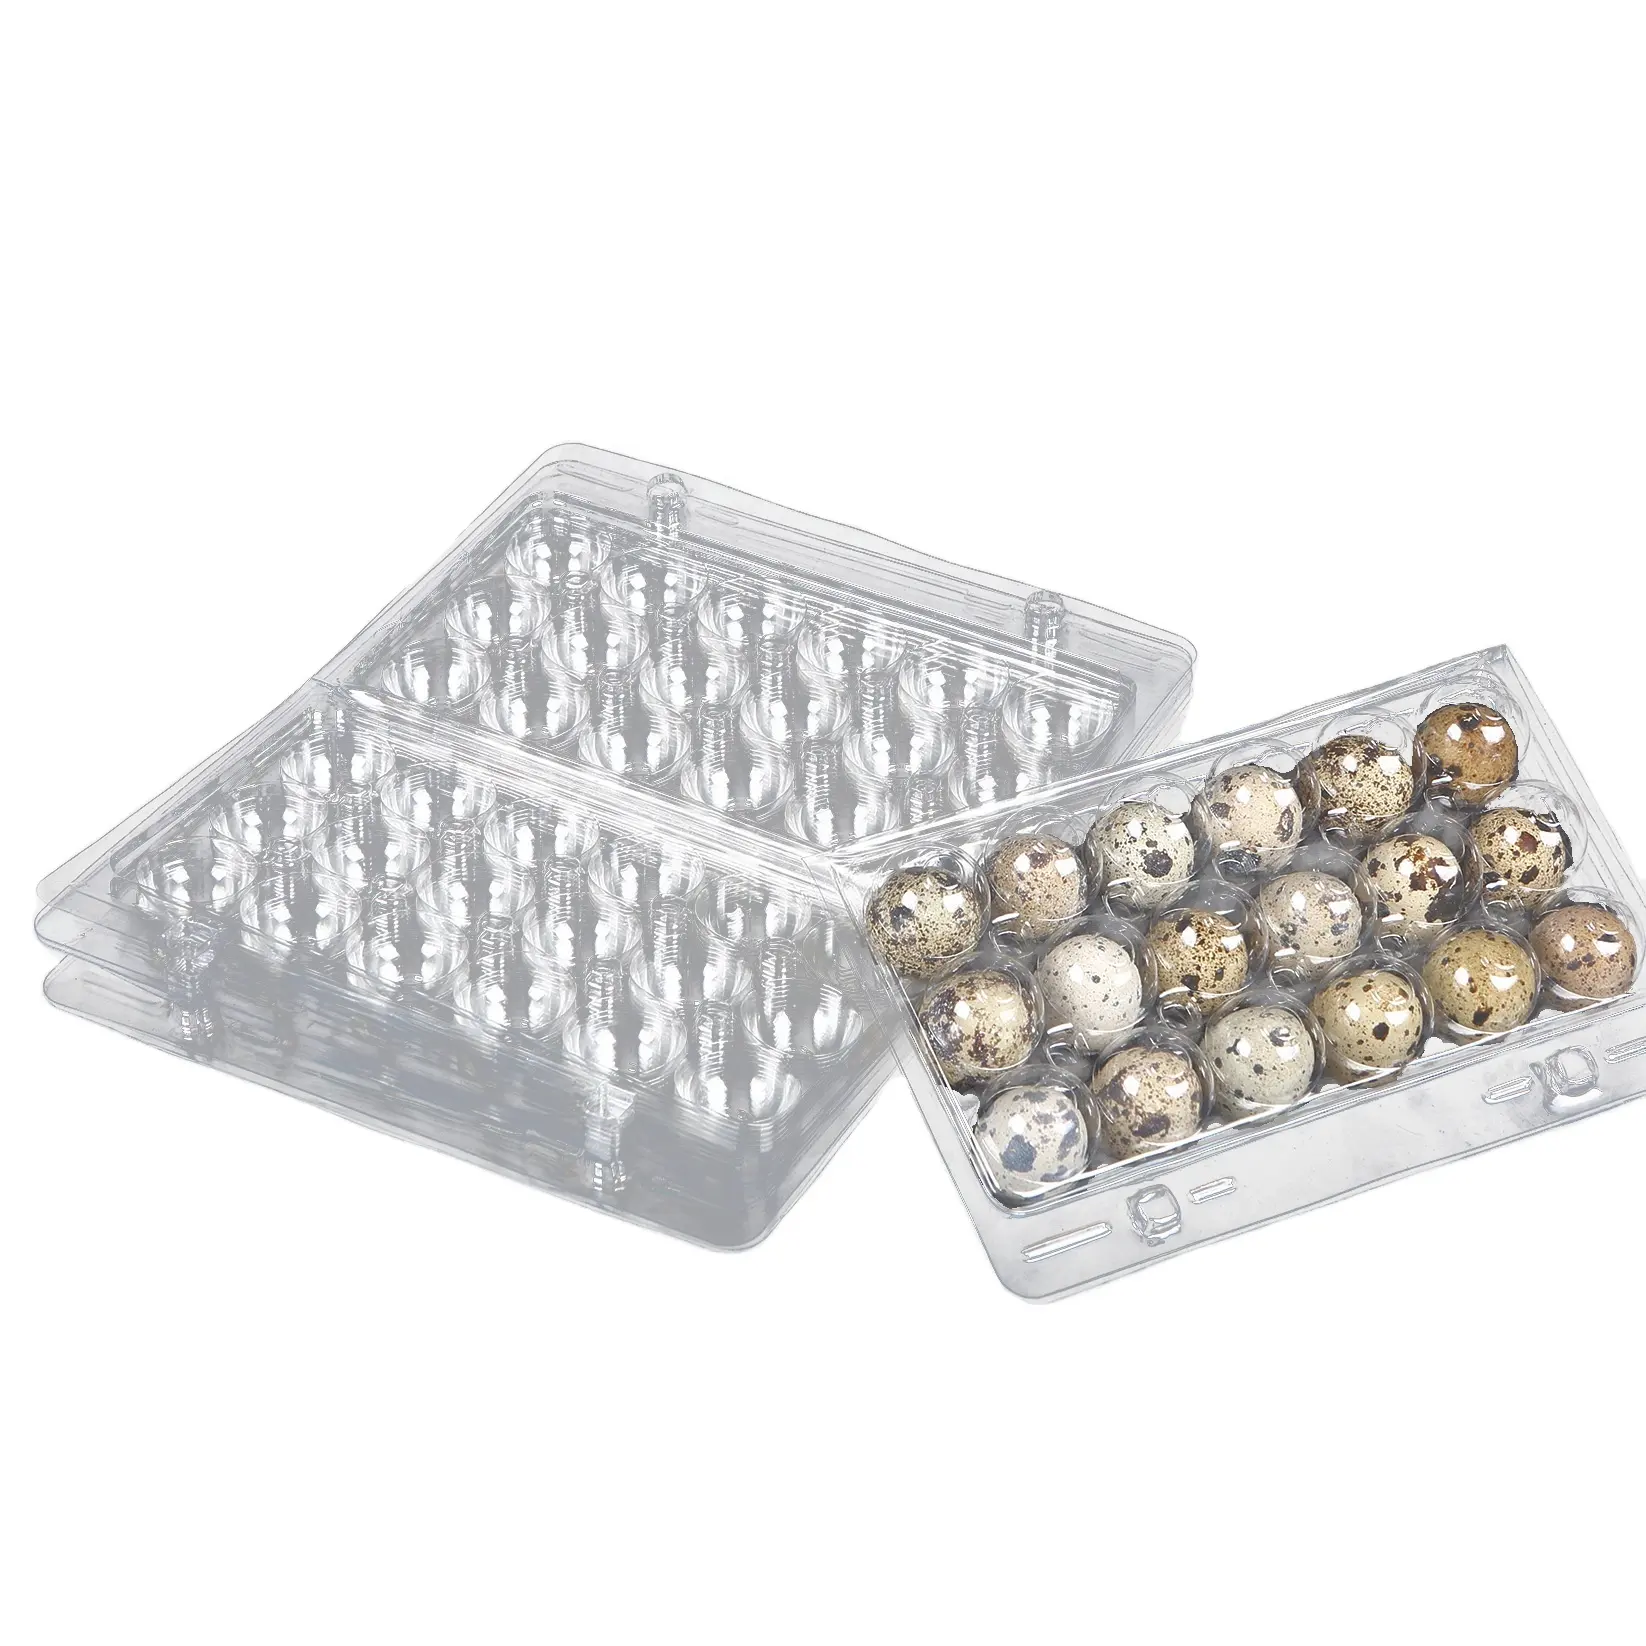 6 12 15 18 20 24 30 Quail Eggs Plastic Tray Carton Containers